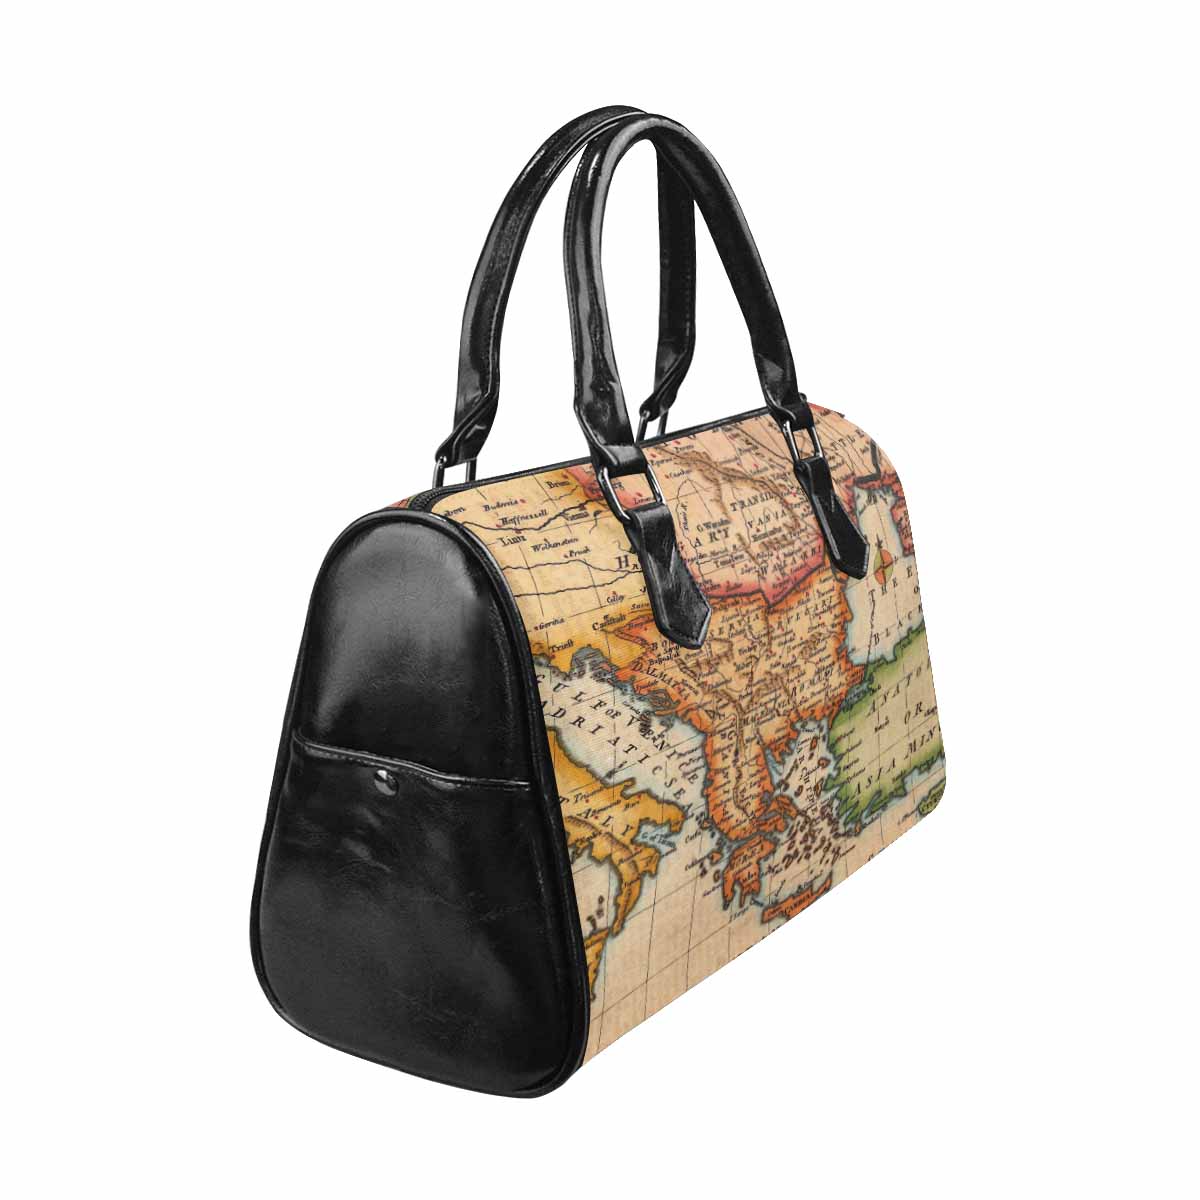 Antique Map design Boston handbag, Model 1695321, Design 22